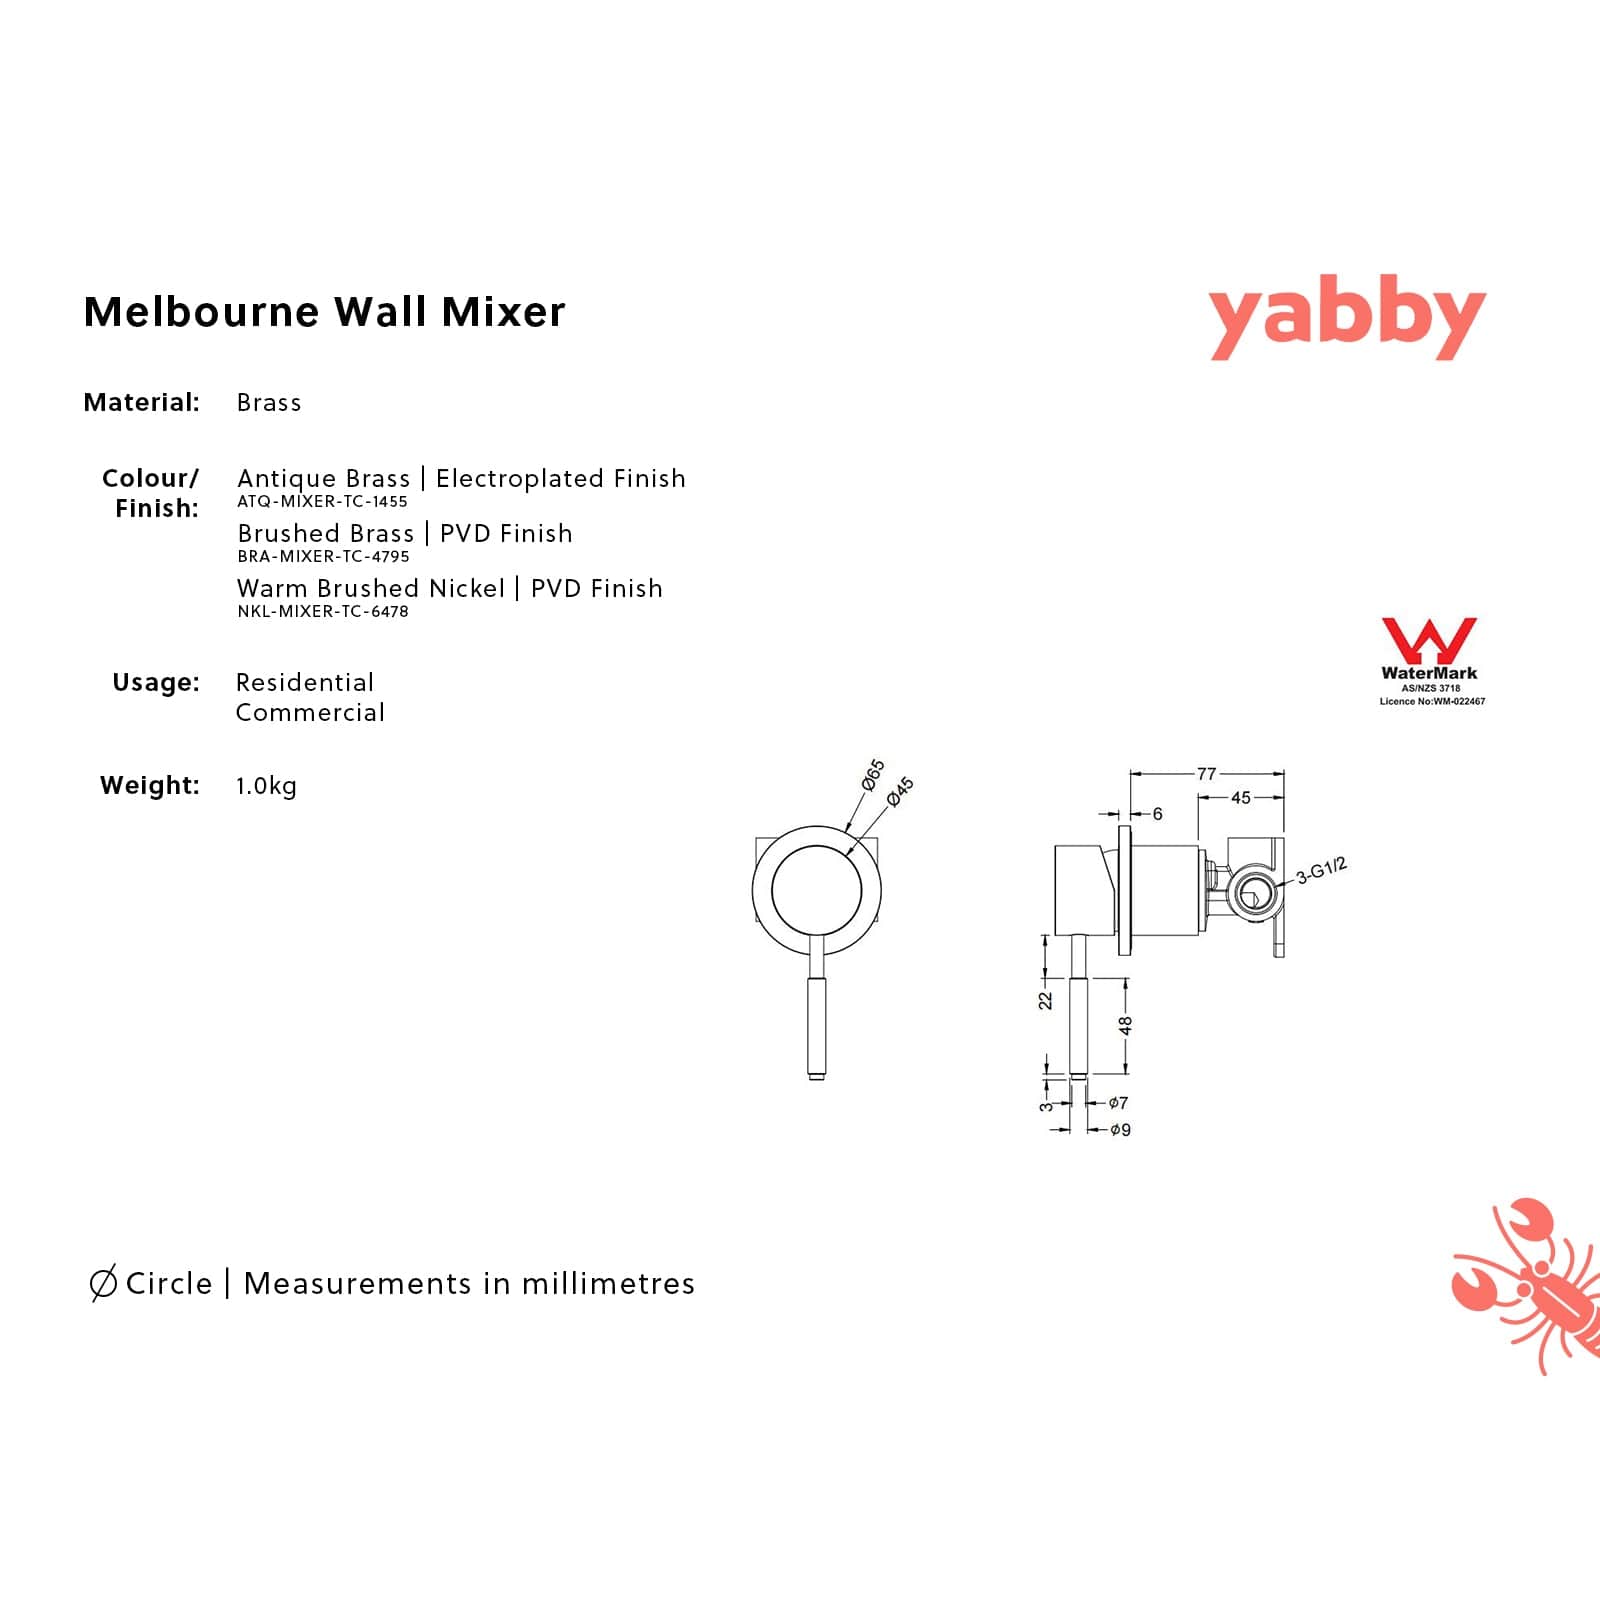 TileCloud TAPWARE Melbourne Wall Mixer Brushed Brass